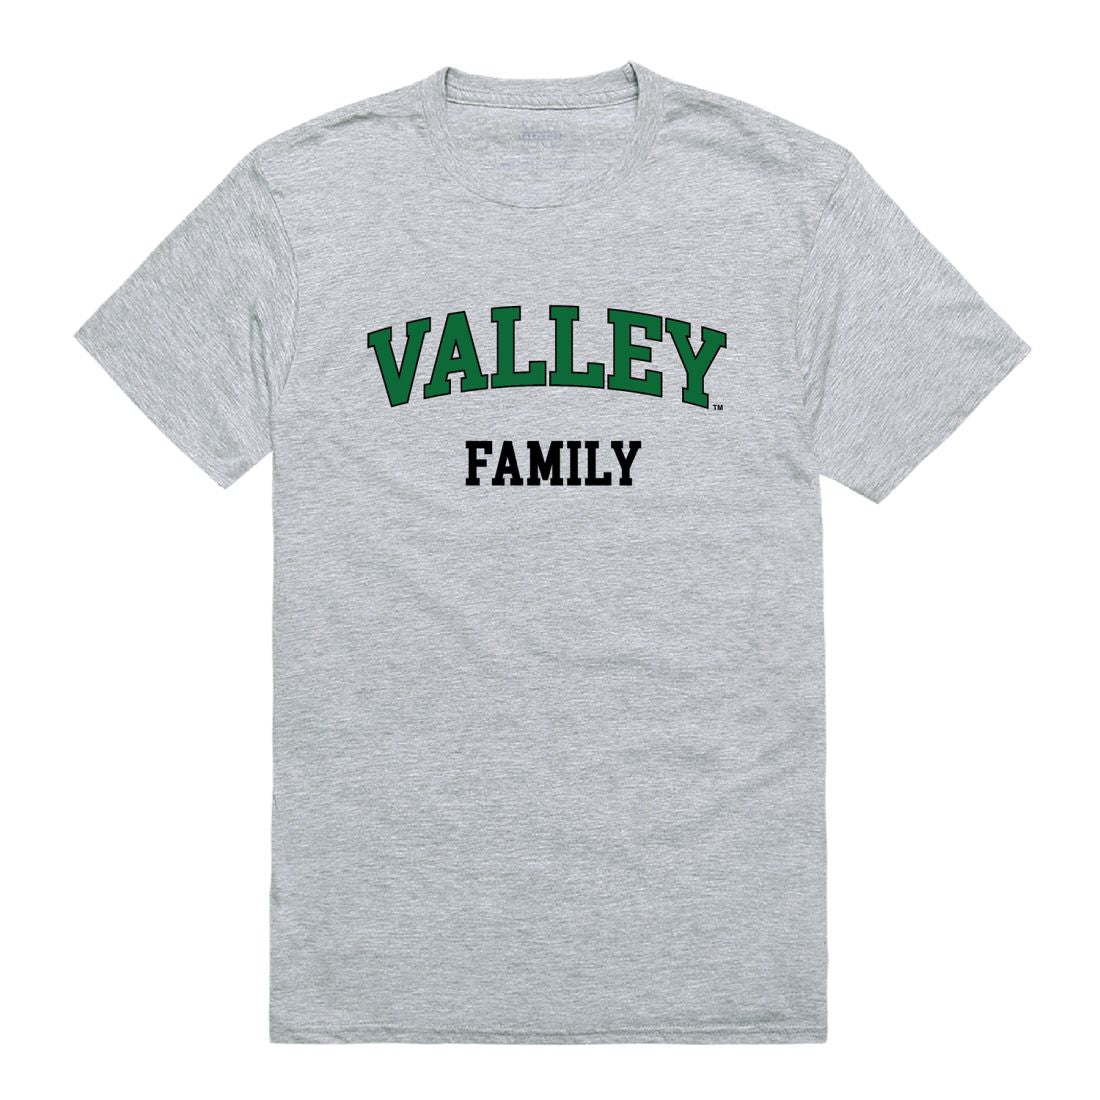 Mississippi Valley State University Delta Devils & Devilettes Family T-Shirt